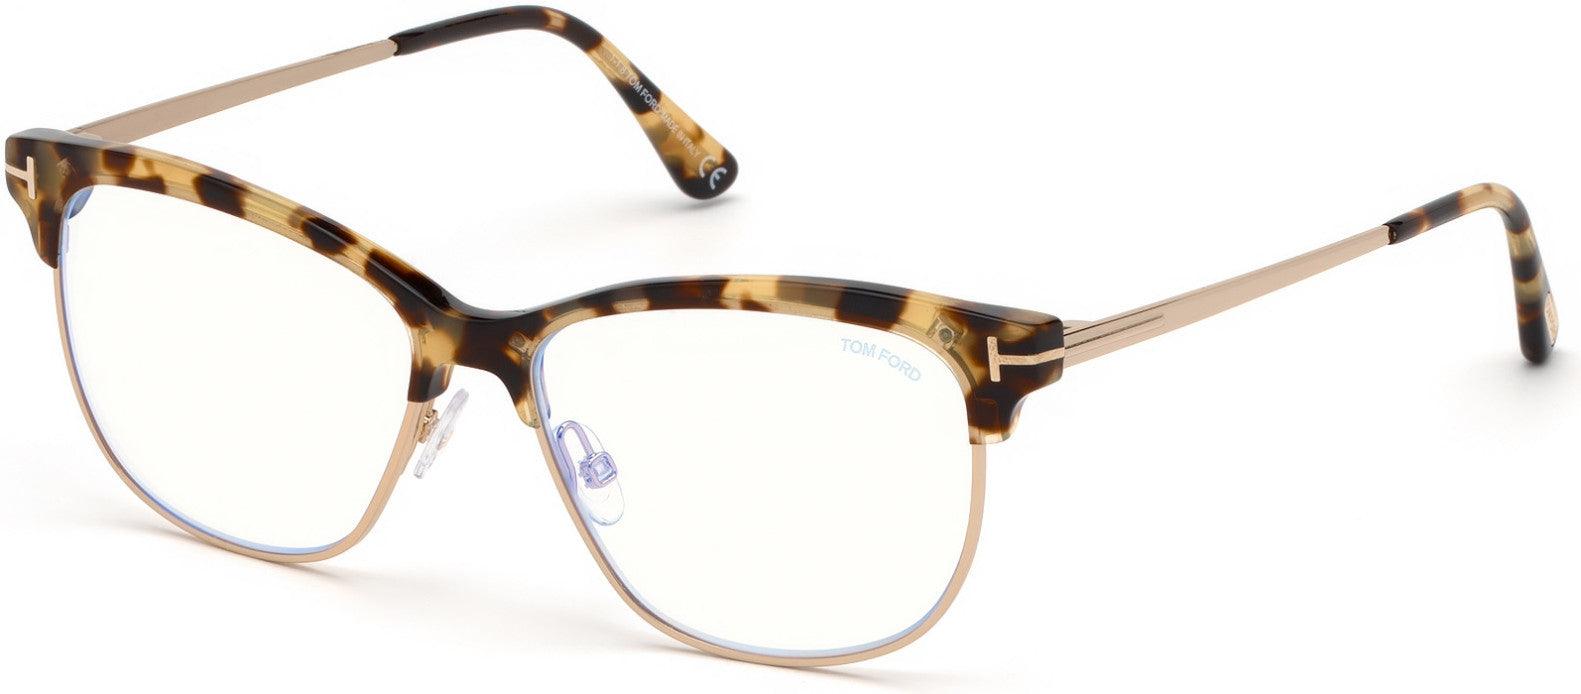 Tom Ford FT5546-B Geometric Eyeglasses 056-056 - Shiny Tortoise, Shiny Rose Gold / Blue Block Lenses